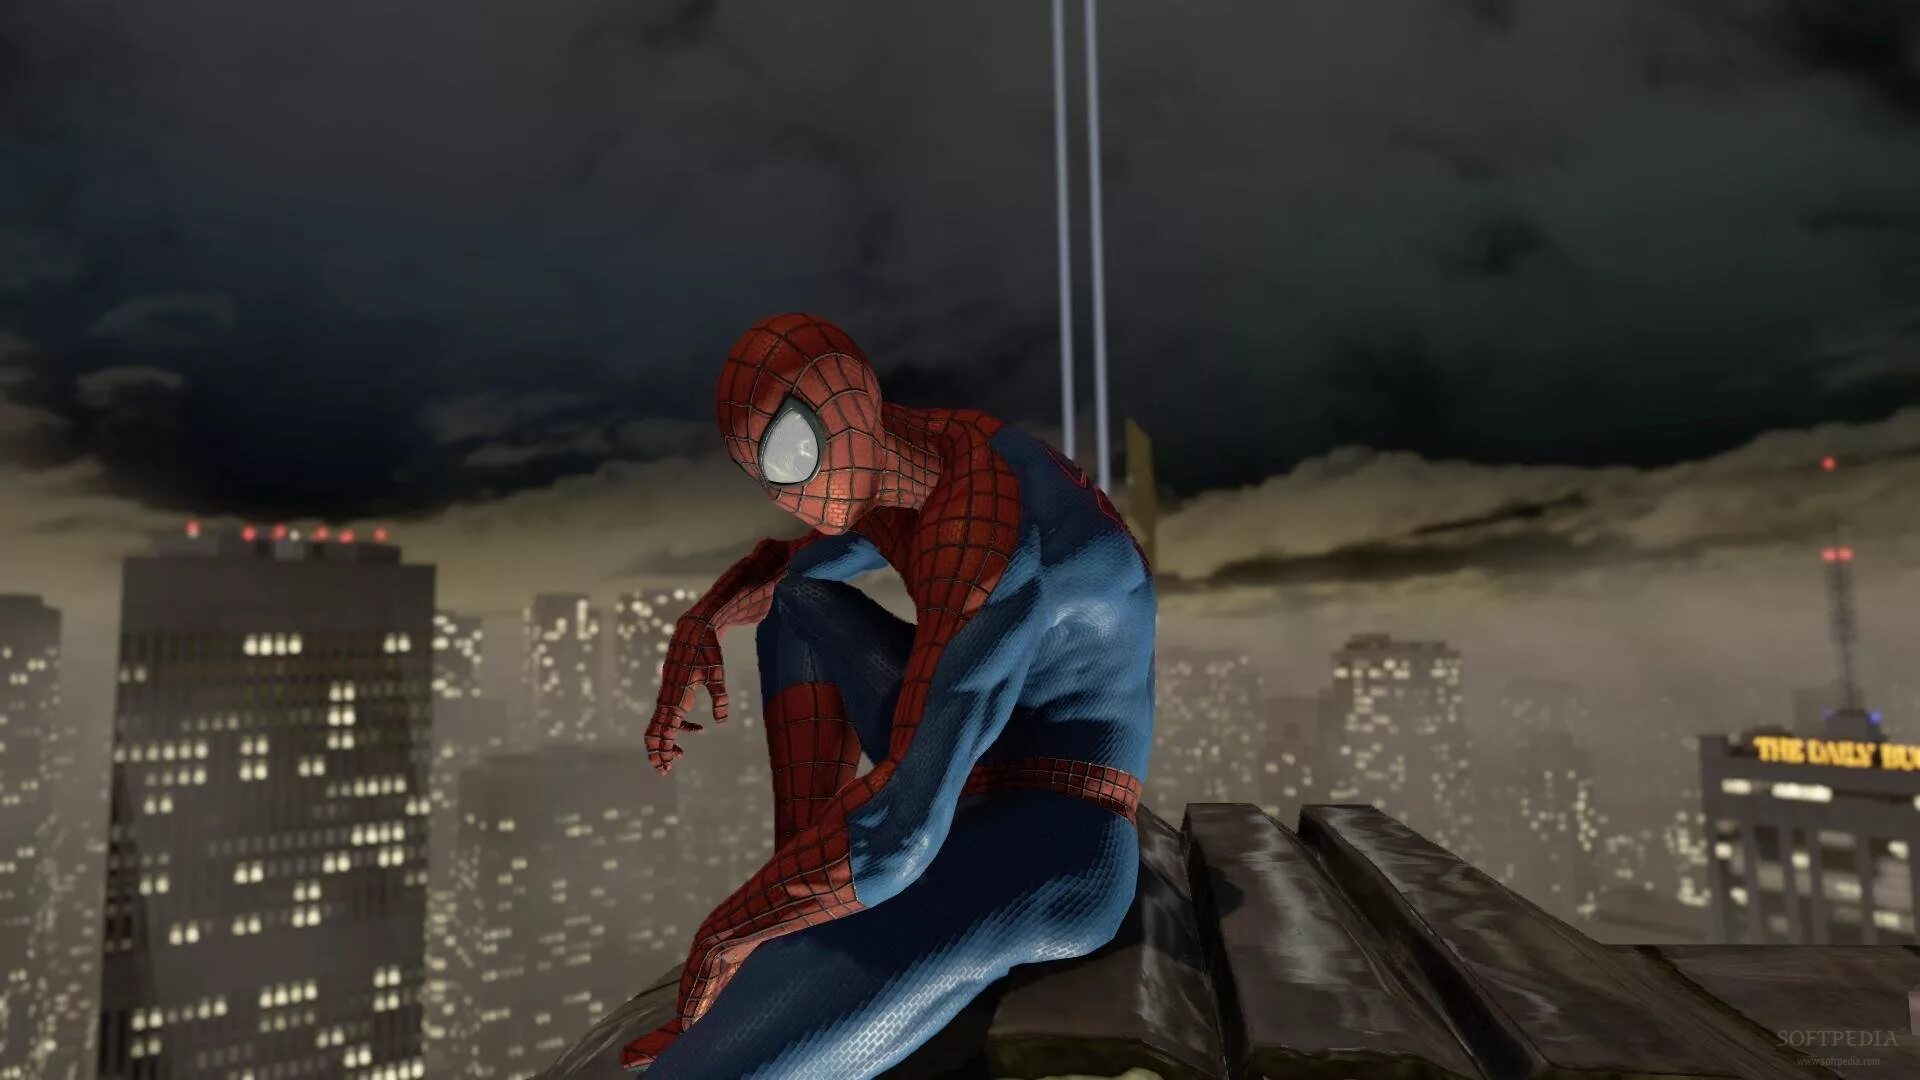 Spider man 2014 игра. The amazing Spider-man 1 игра. Человек паук Амейзинг 2. Человек паук амазинг 2 игра. The amazing Spider man 2 2014 игра.